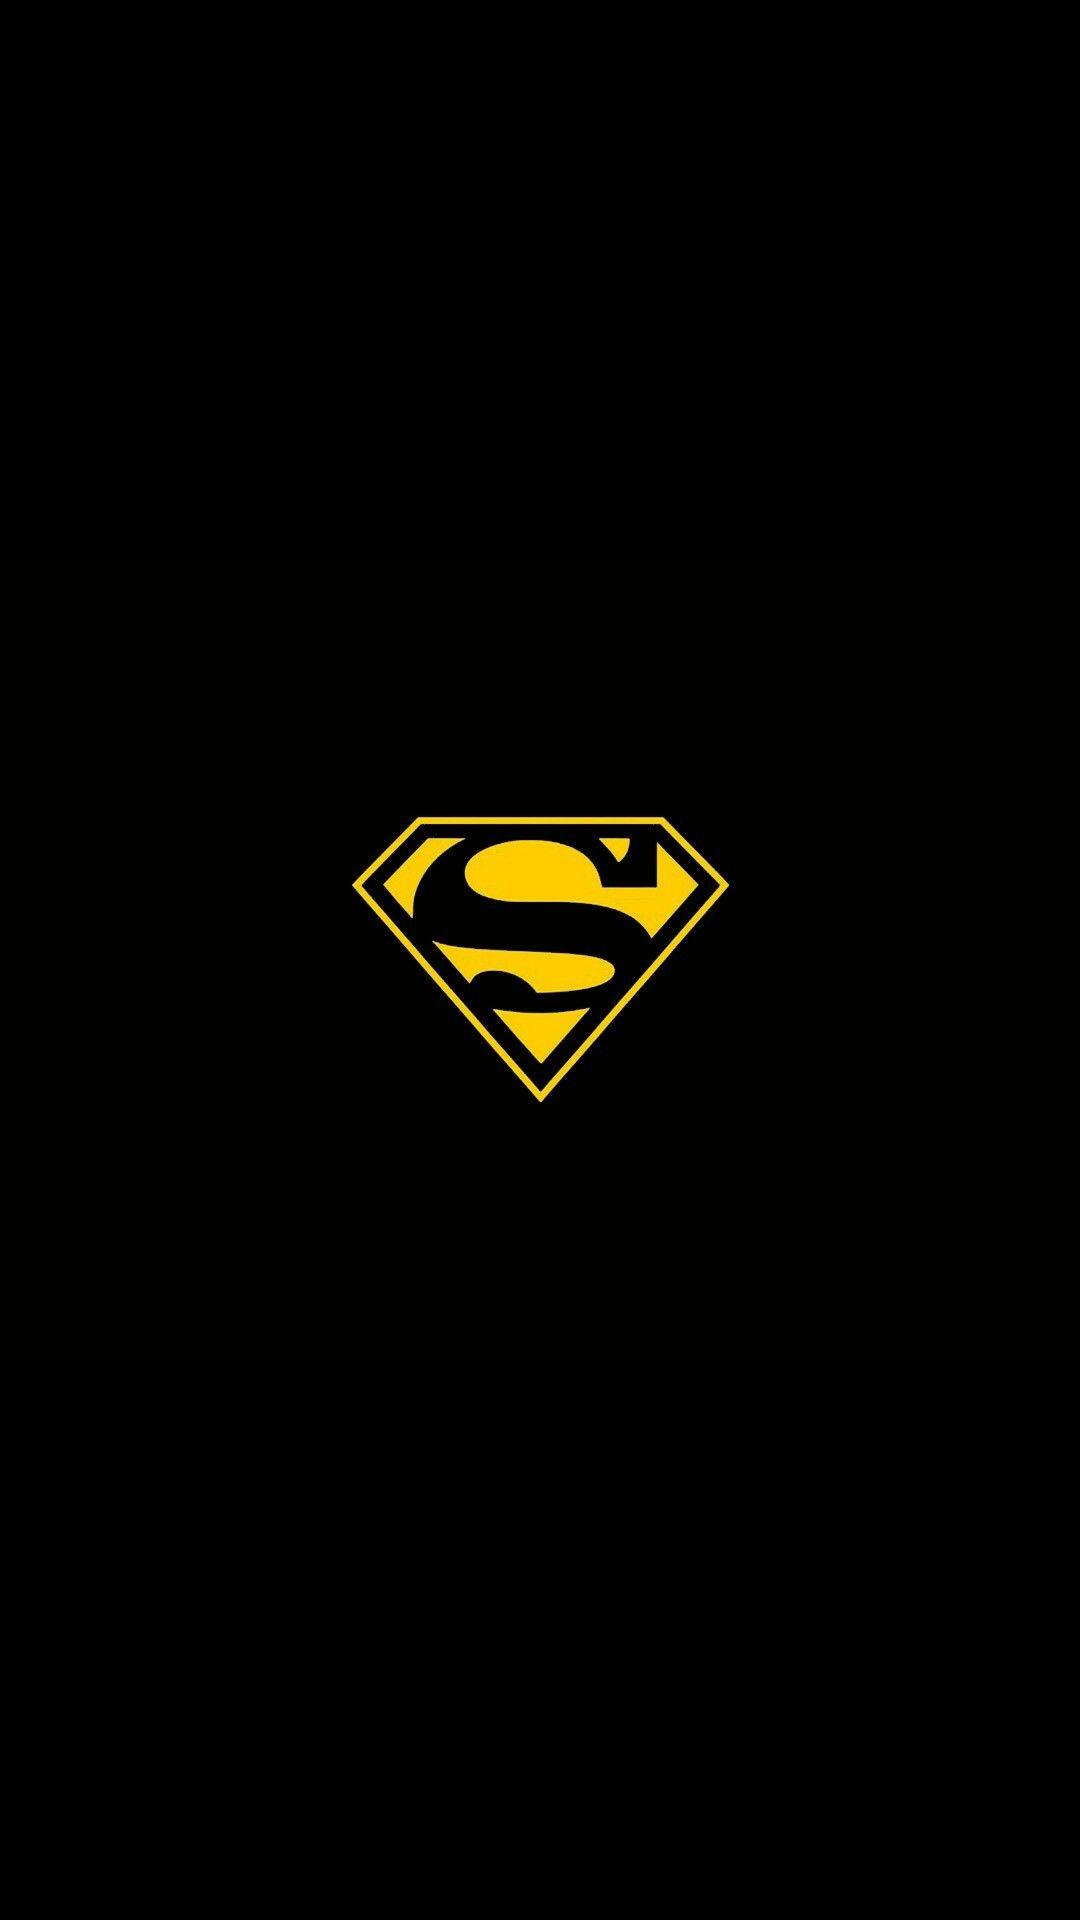 Superman Symbol Iphone Wallpapers Top Free Superman Symbol Iphone Backgrounds Wallpaperaccess